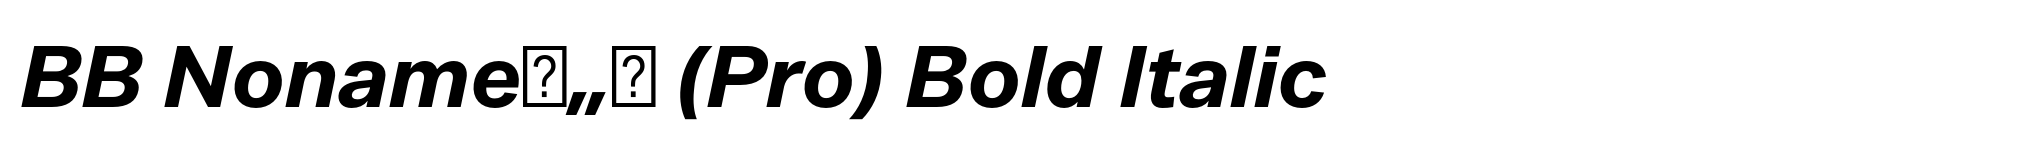 BB Nonameв„ў (Pro) Bold Italic image